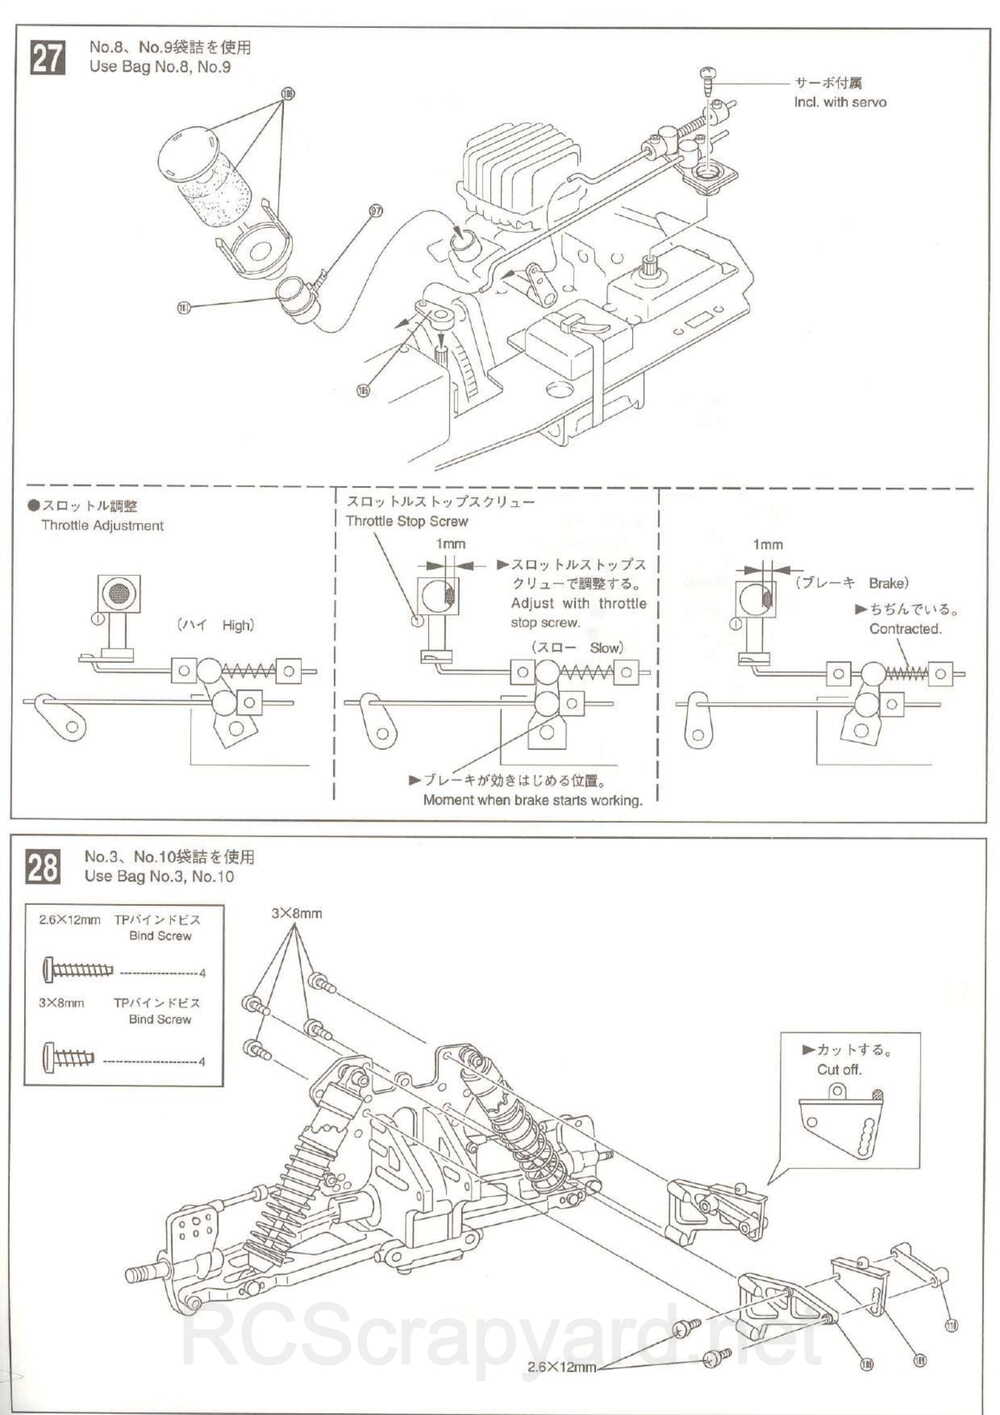 Kyosho - 31345 - Inferno 10 - Manual - Page 15